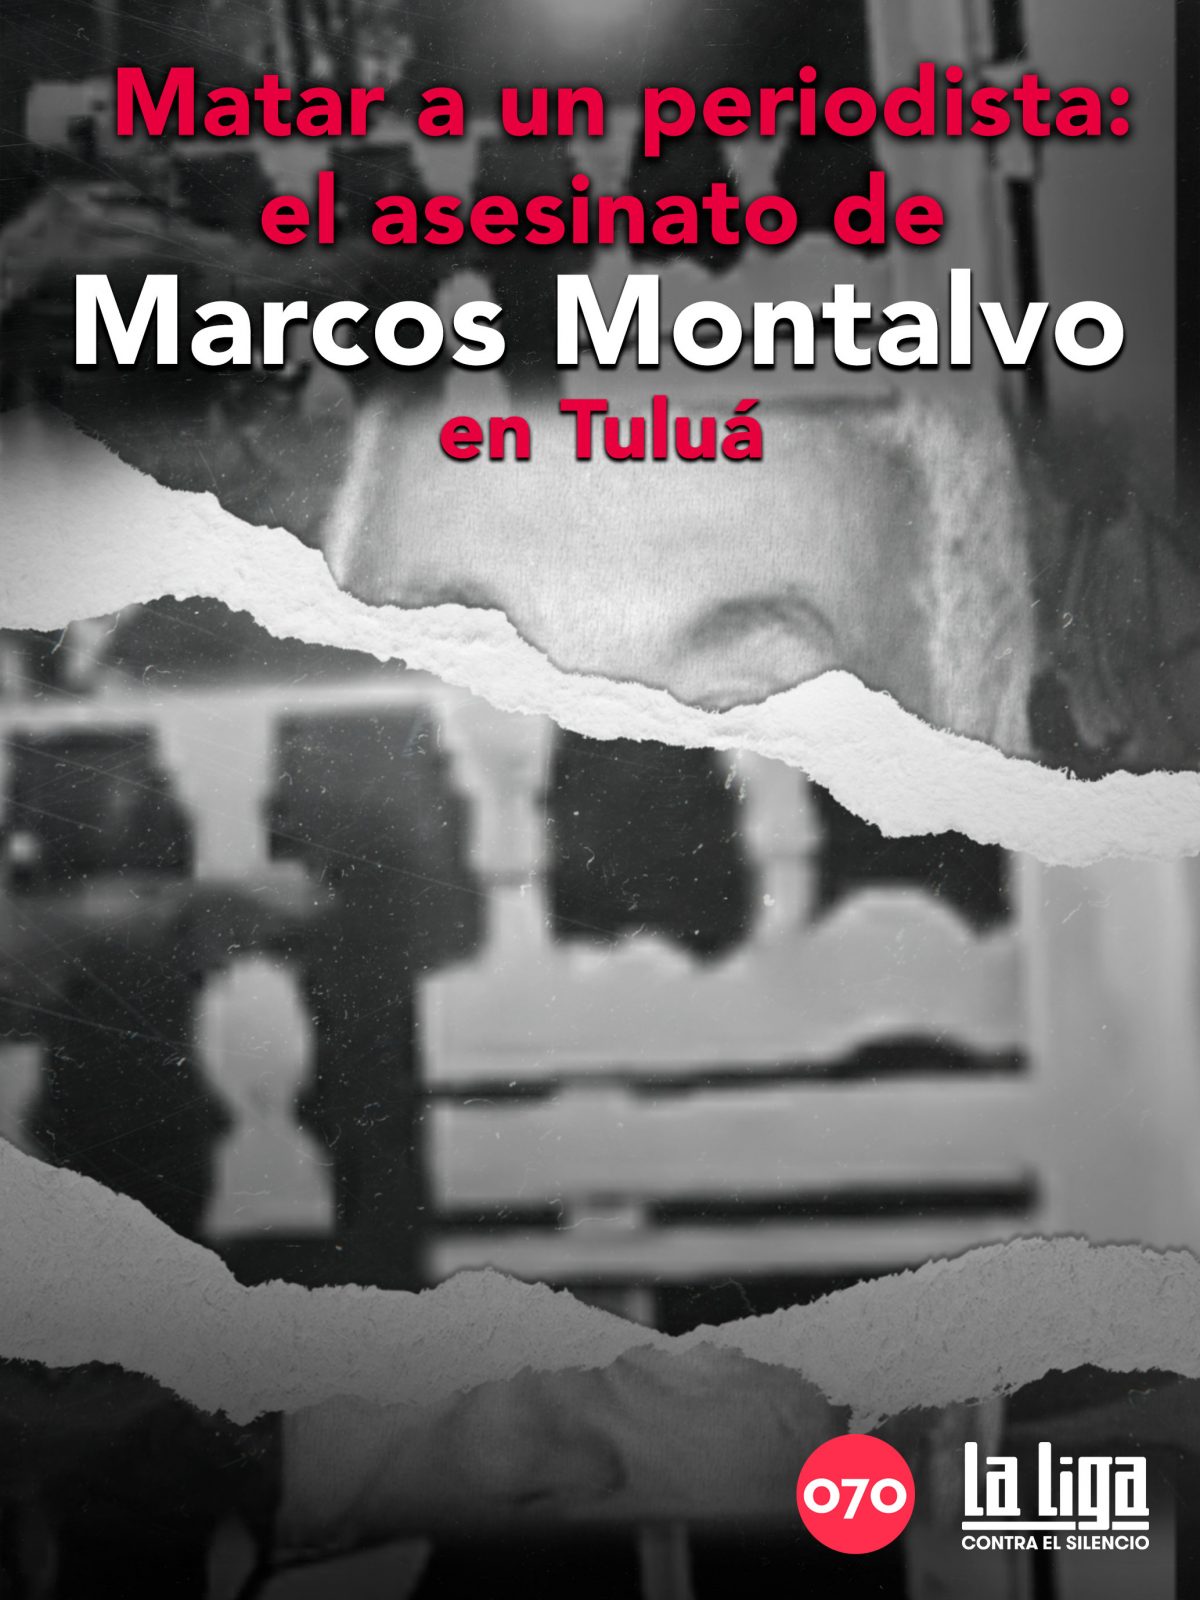 Asesinato periodista Marcos Montalvo